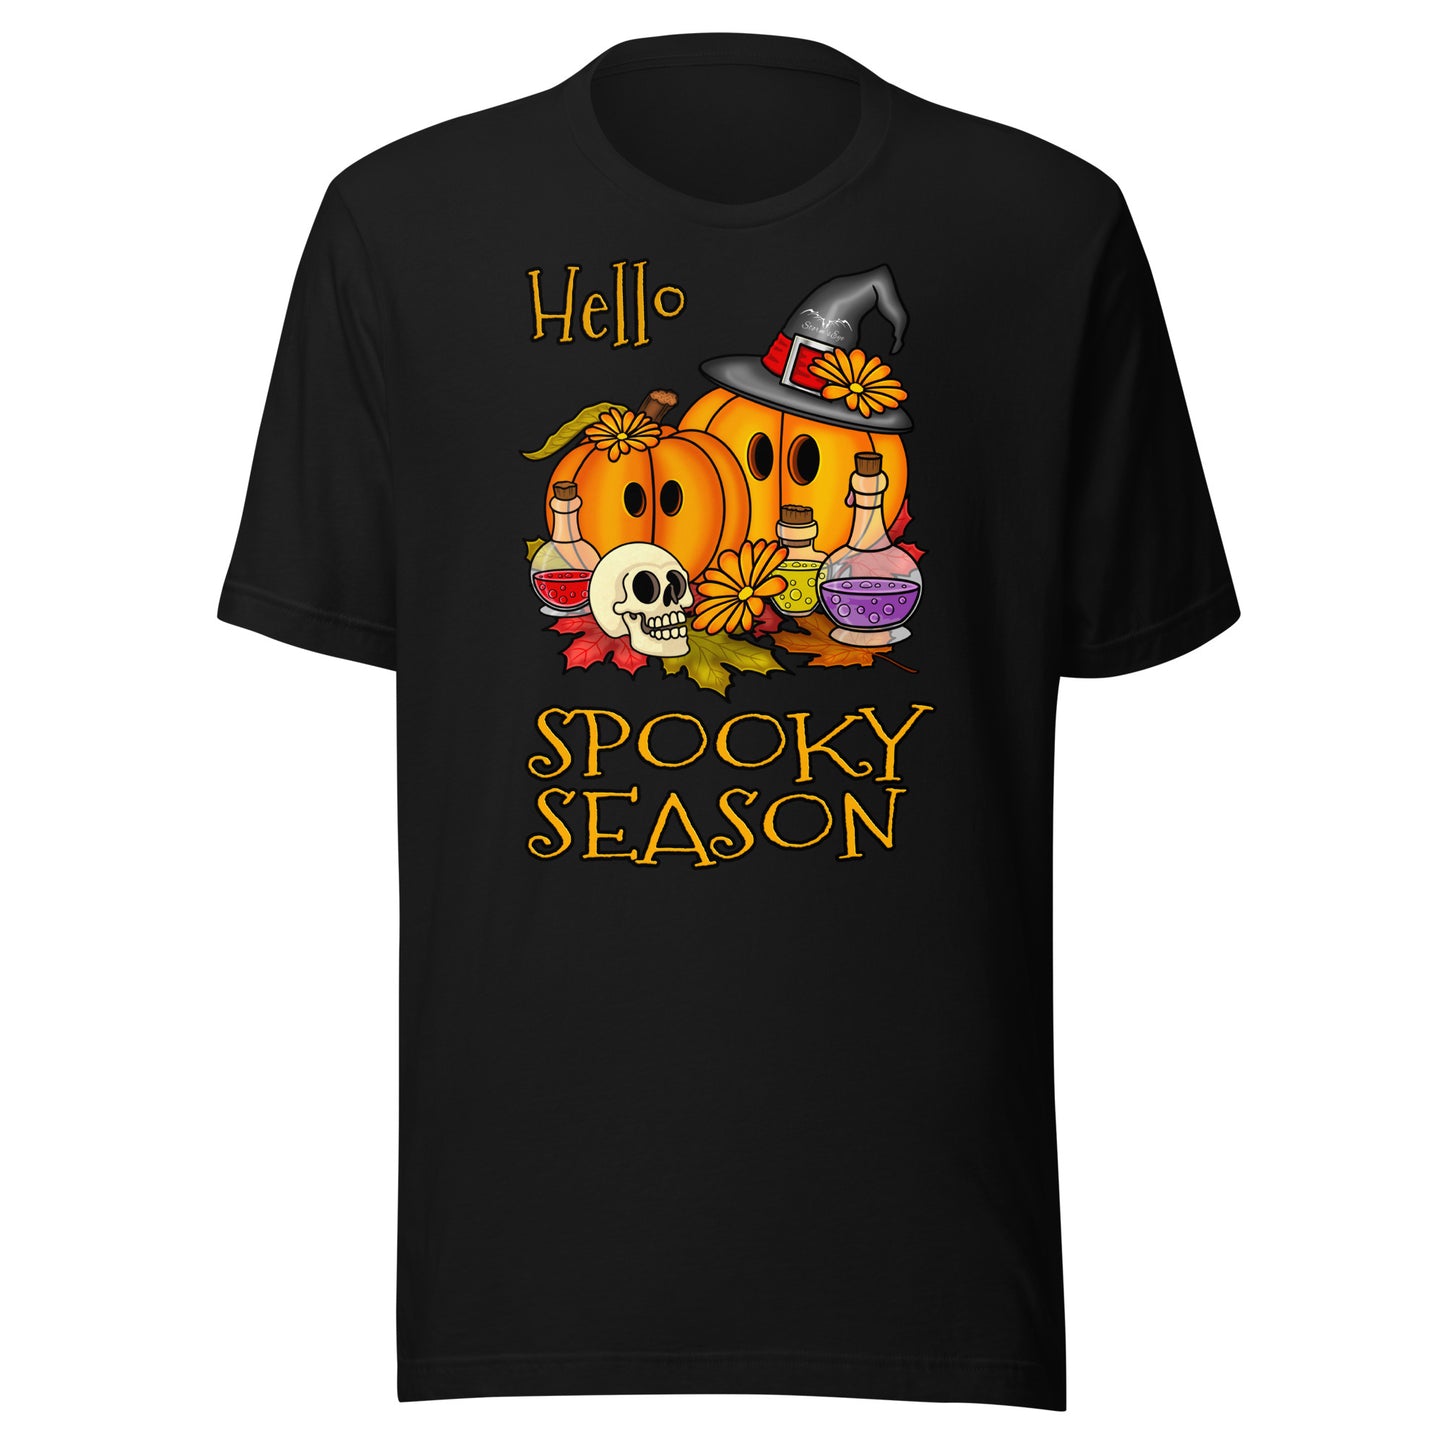 stormseye design hello spooky season halloween T shirt flat view black